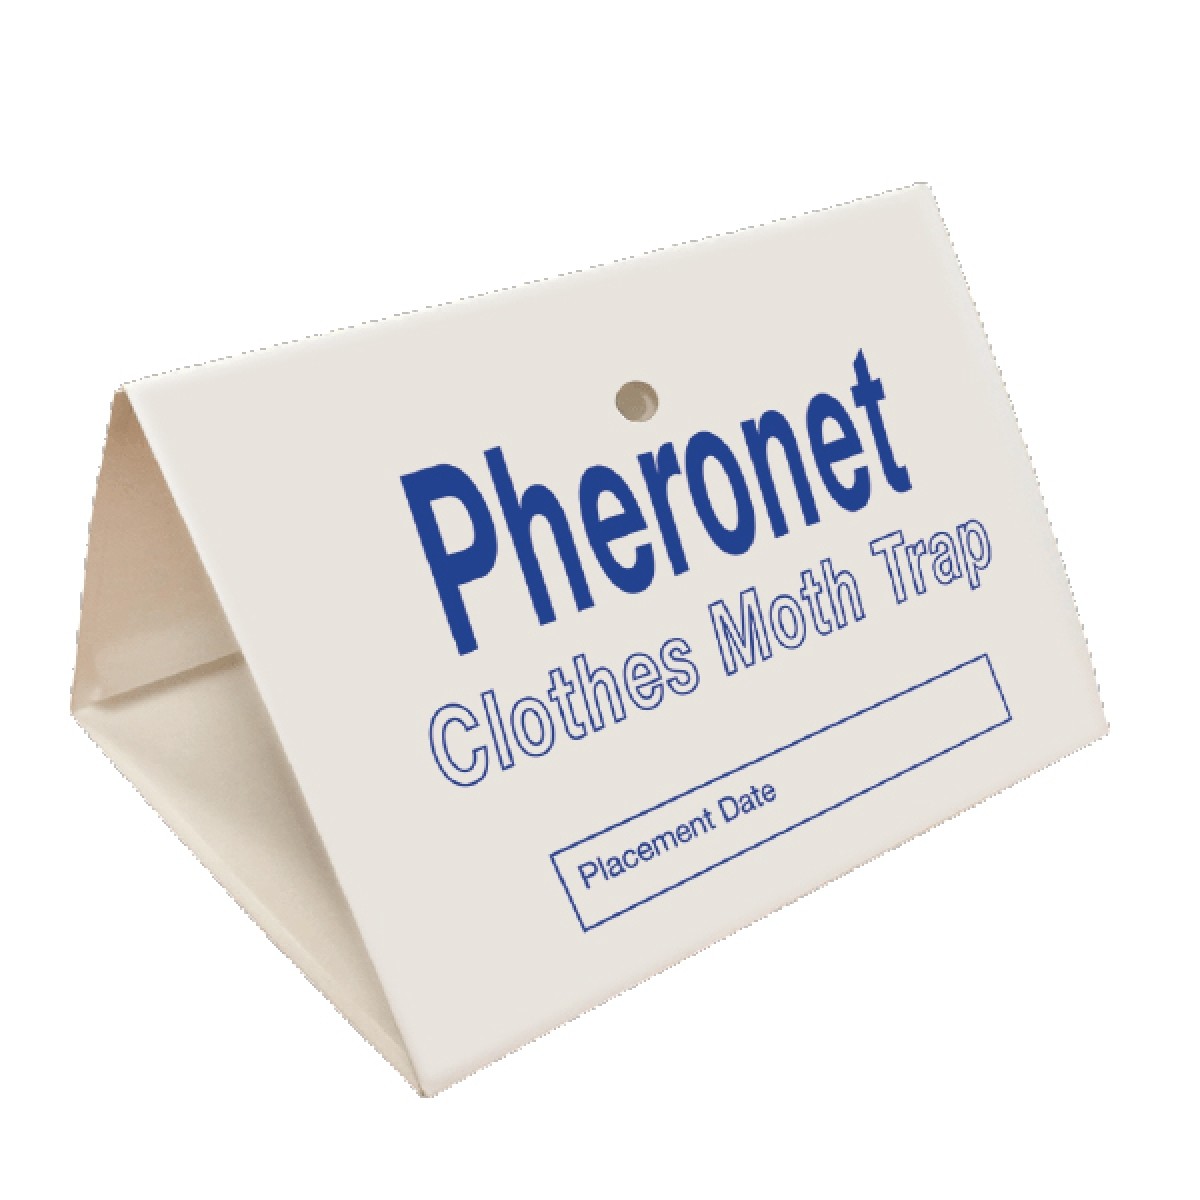 Pheronet Clothes Moth Trap